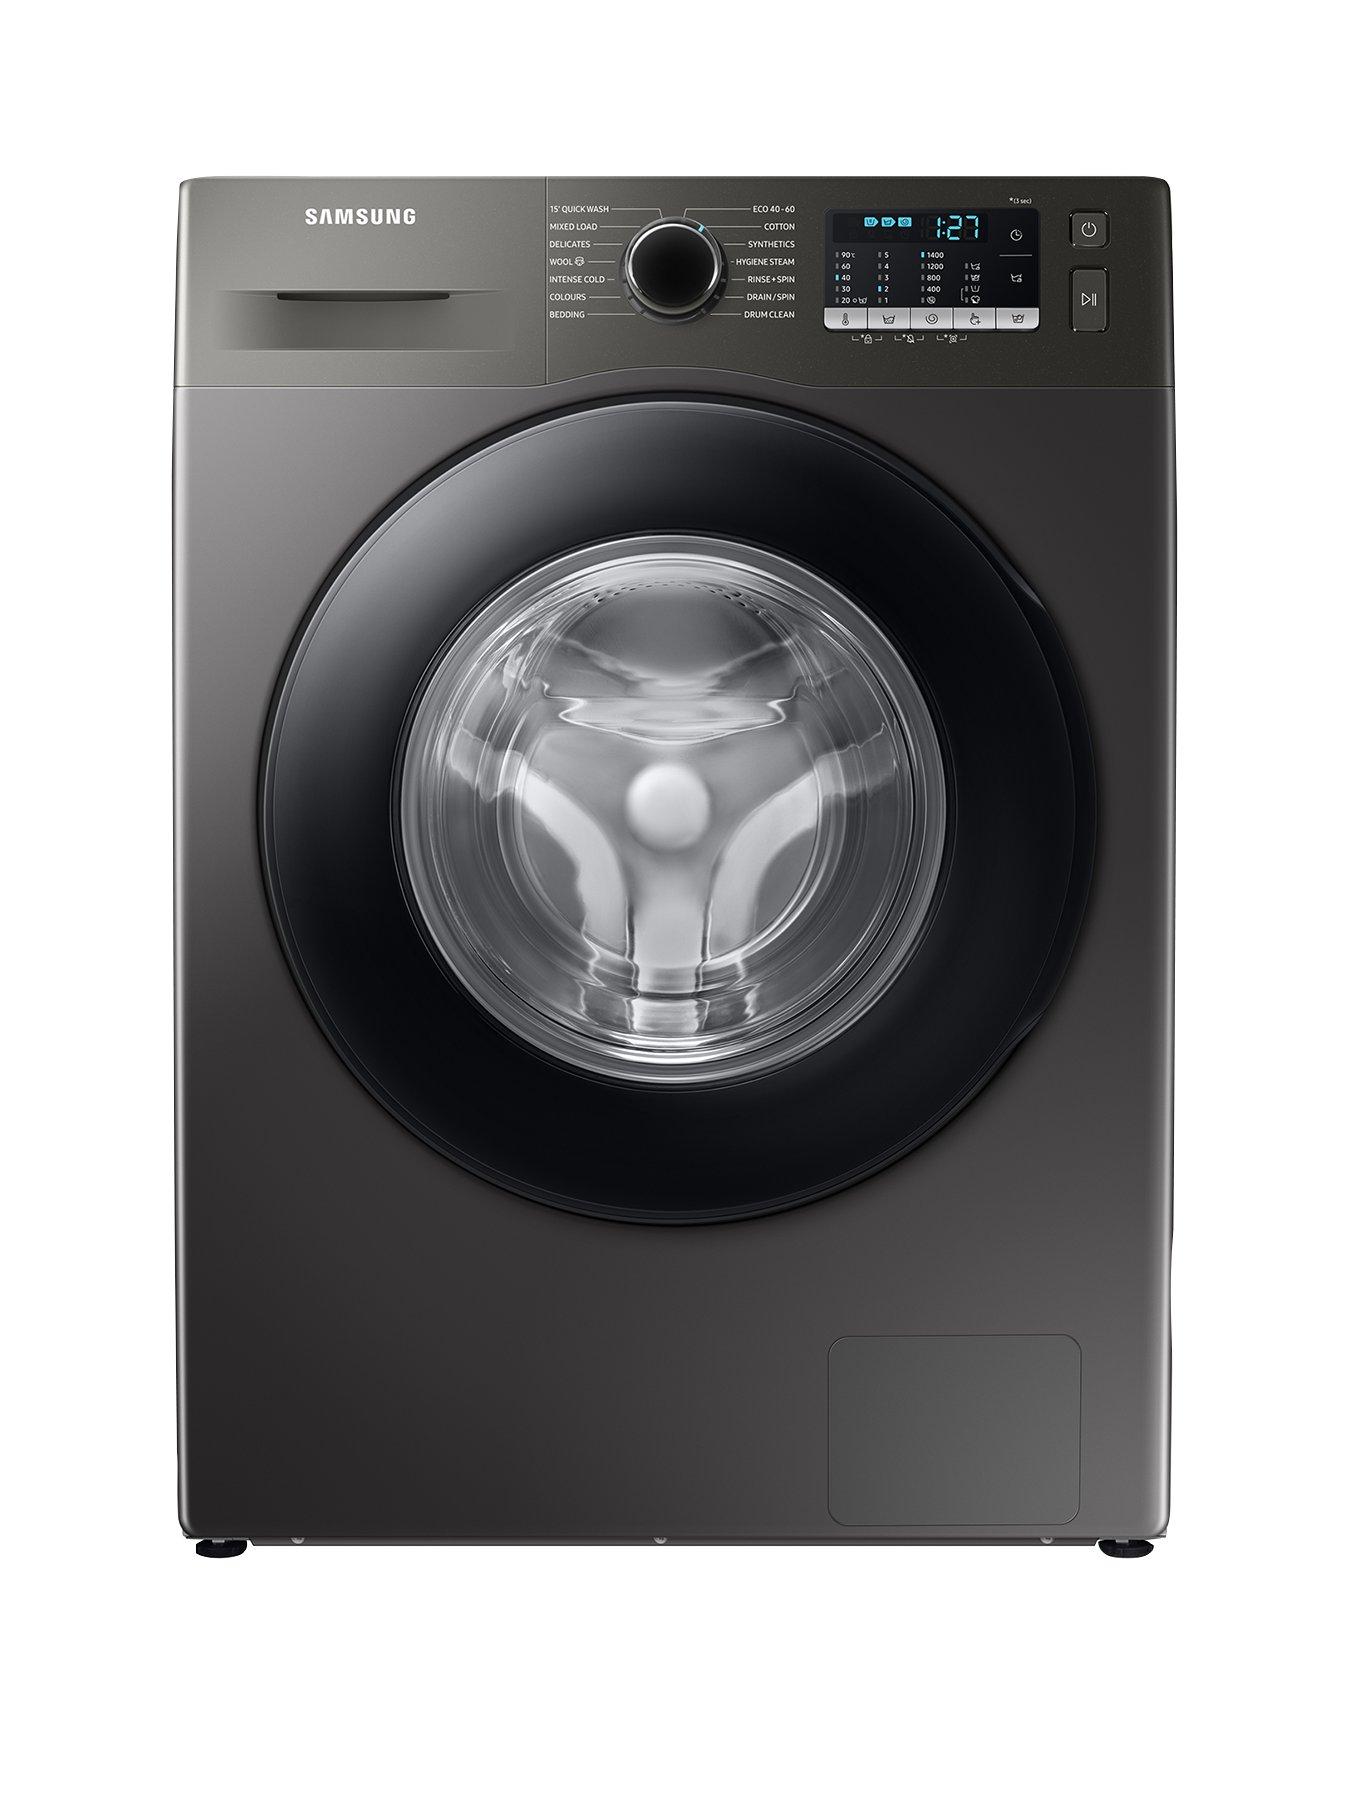 Samsung Series 5 Ww11Bga046Ax/Eu Spacemax Washing Machine - 11Kg Load 1400 Spin A Rated - Graphite